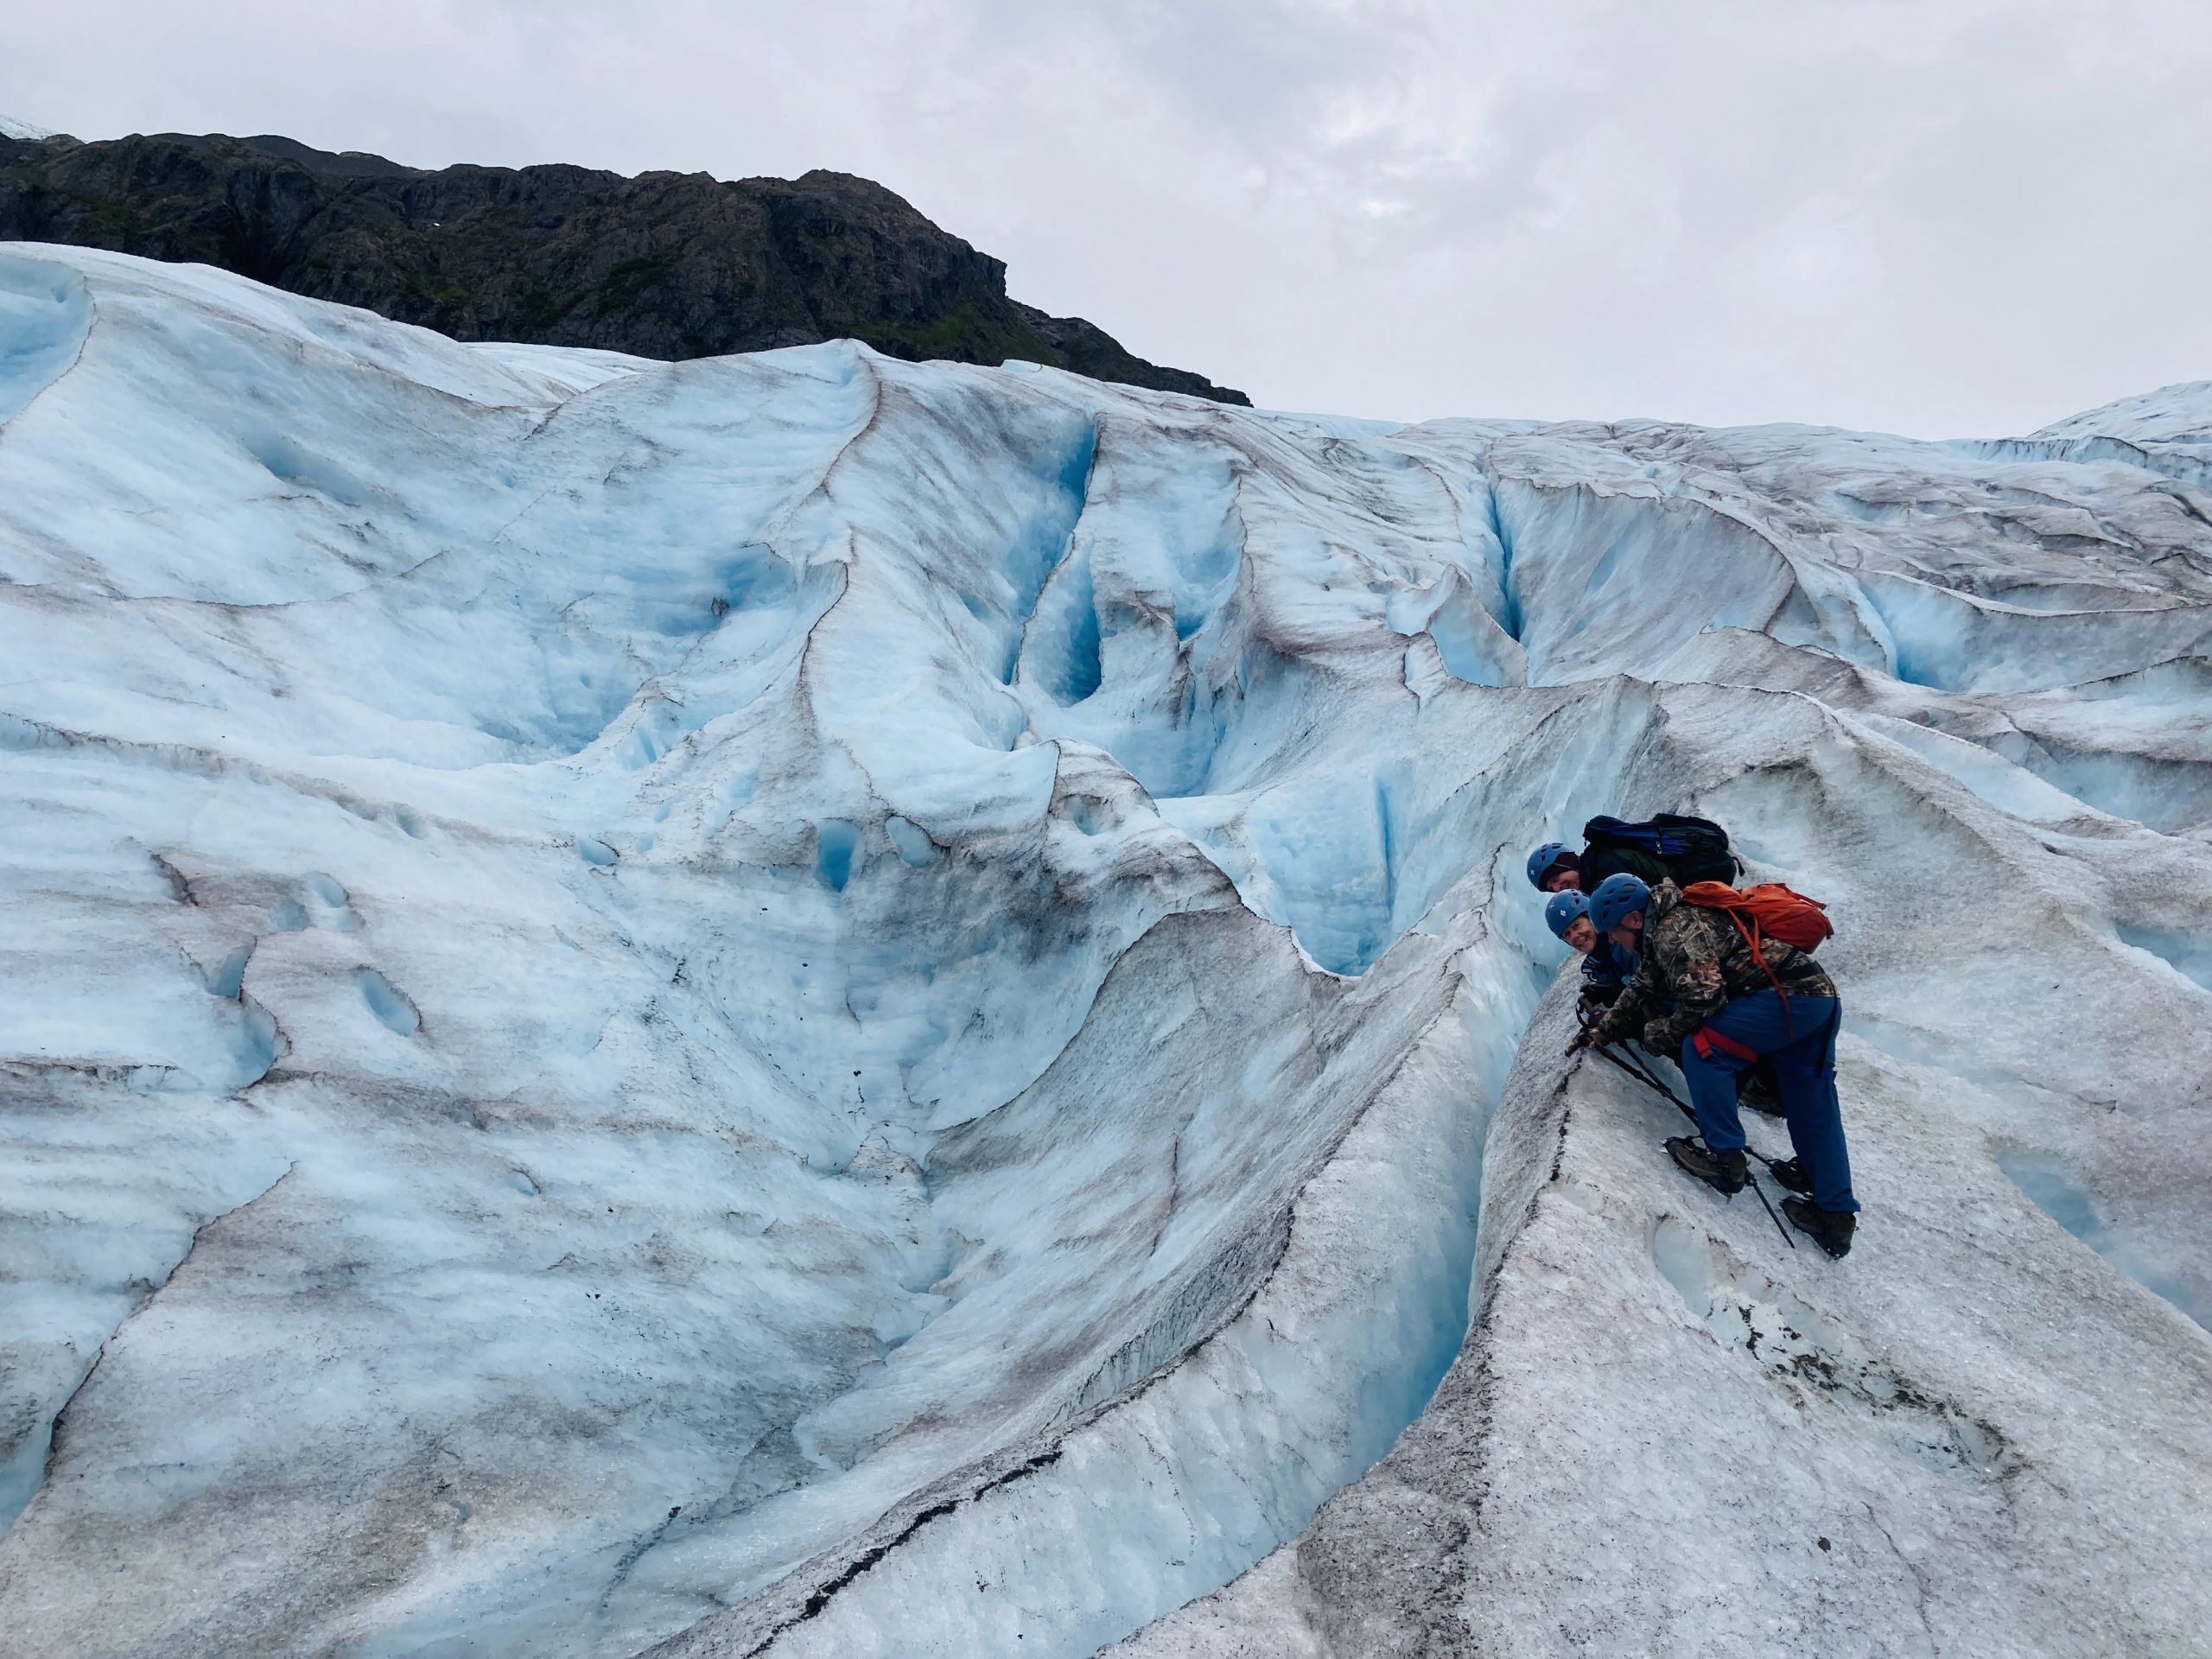 TRIP REPORT: 8/4/22 Exit Glacier Ice Hiking Adventure